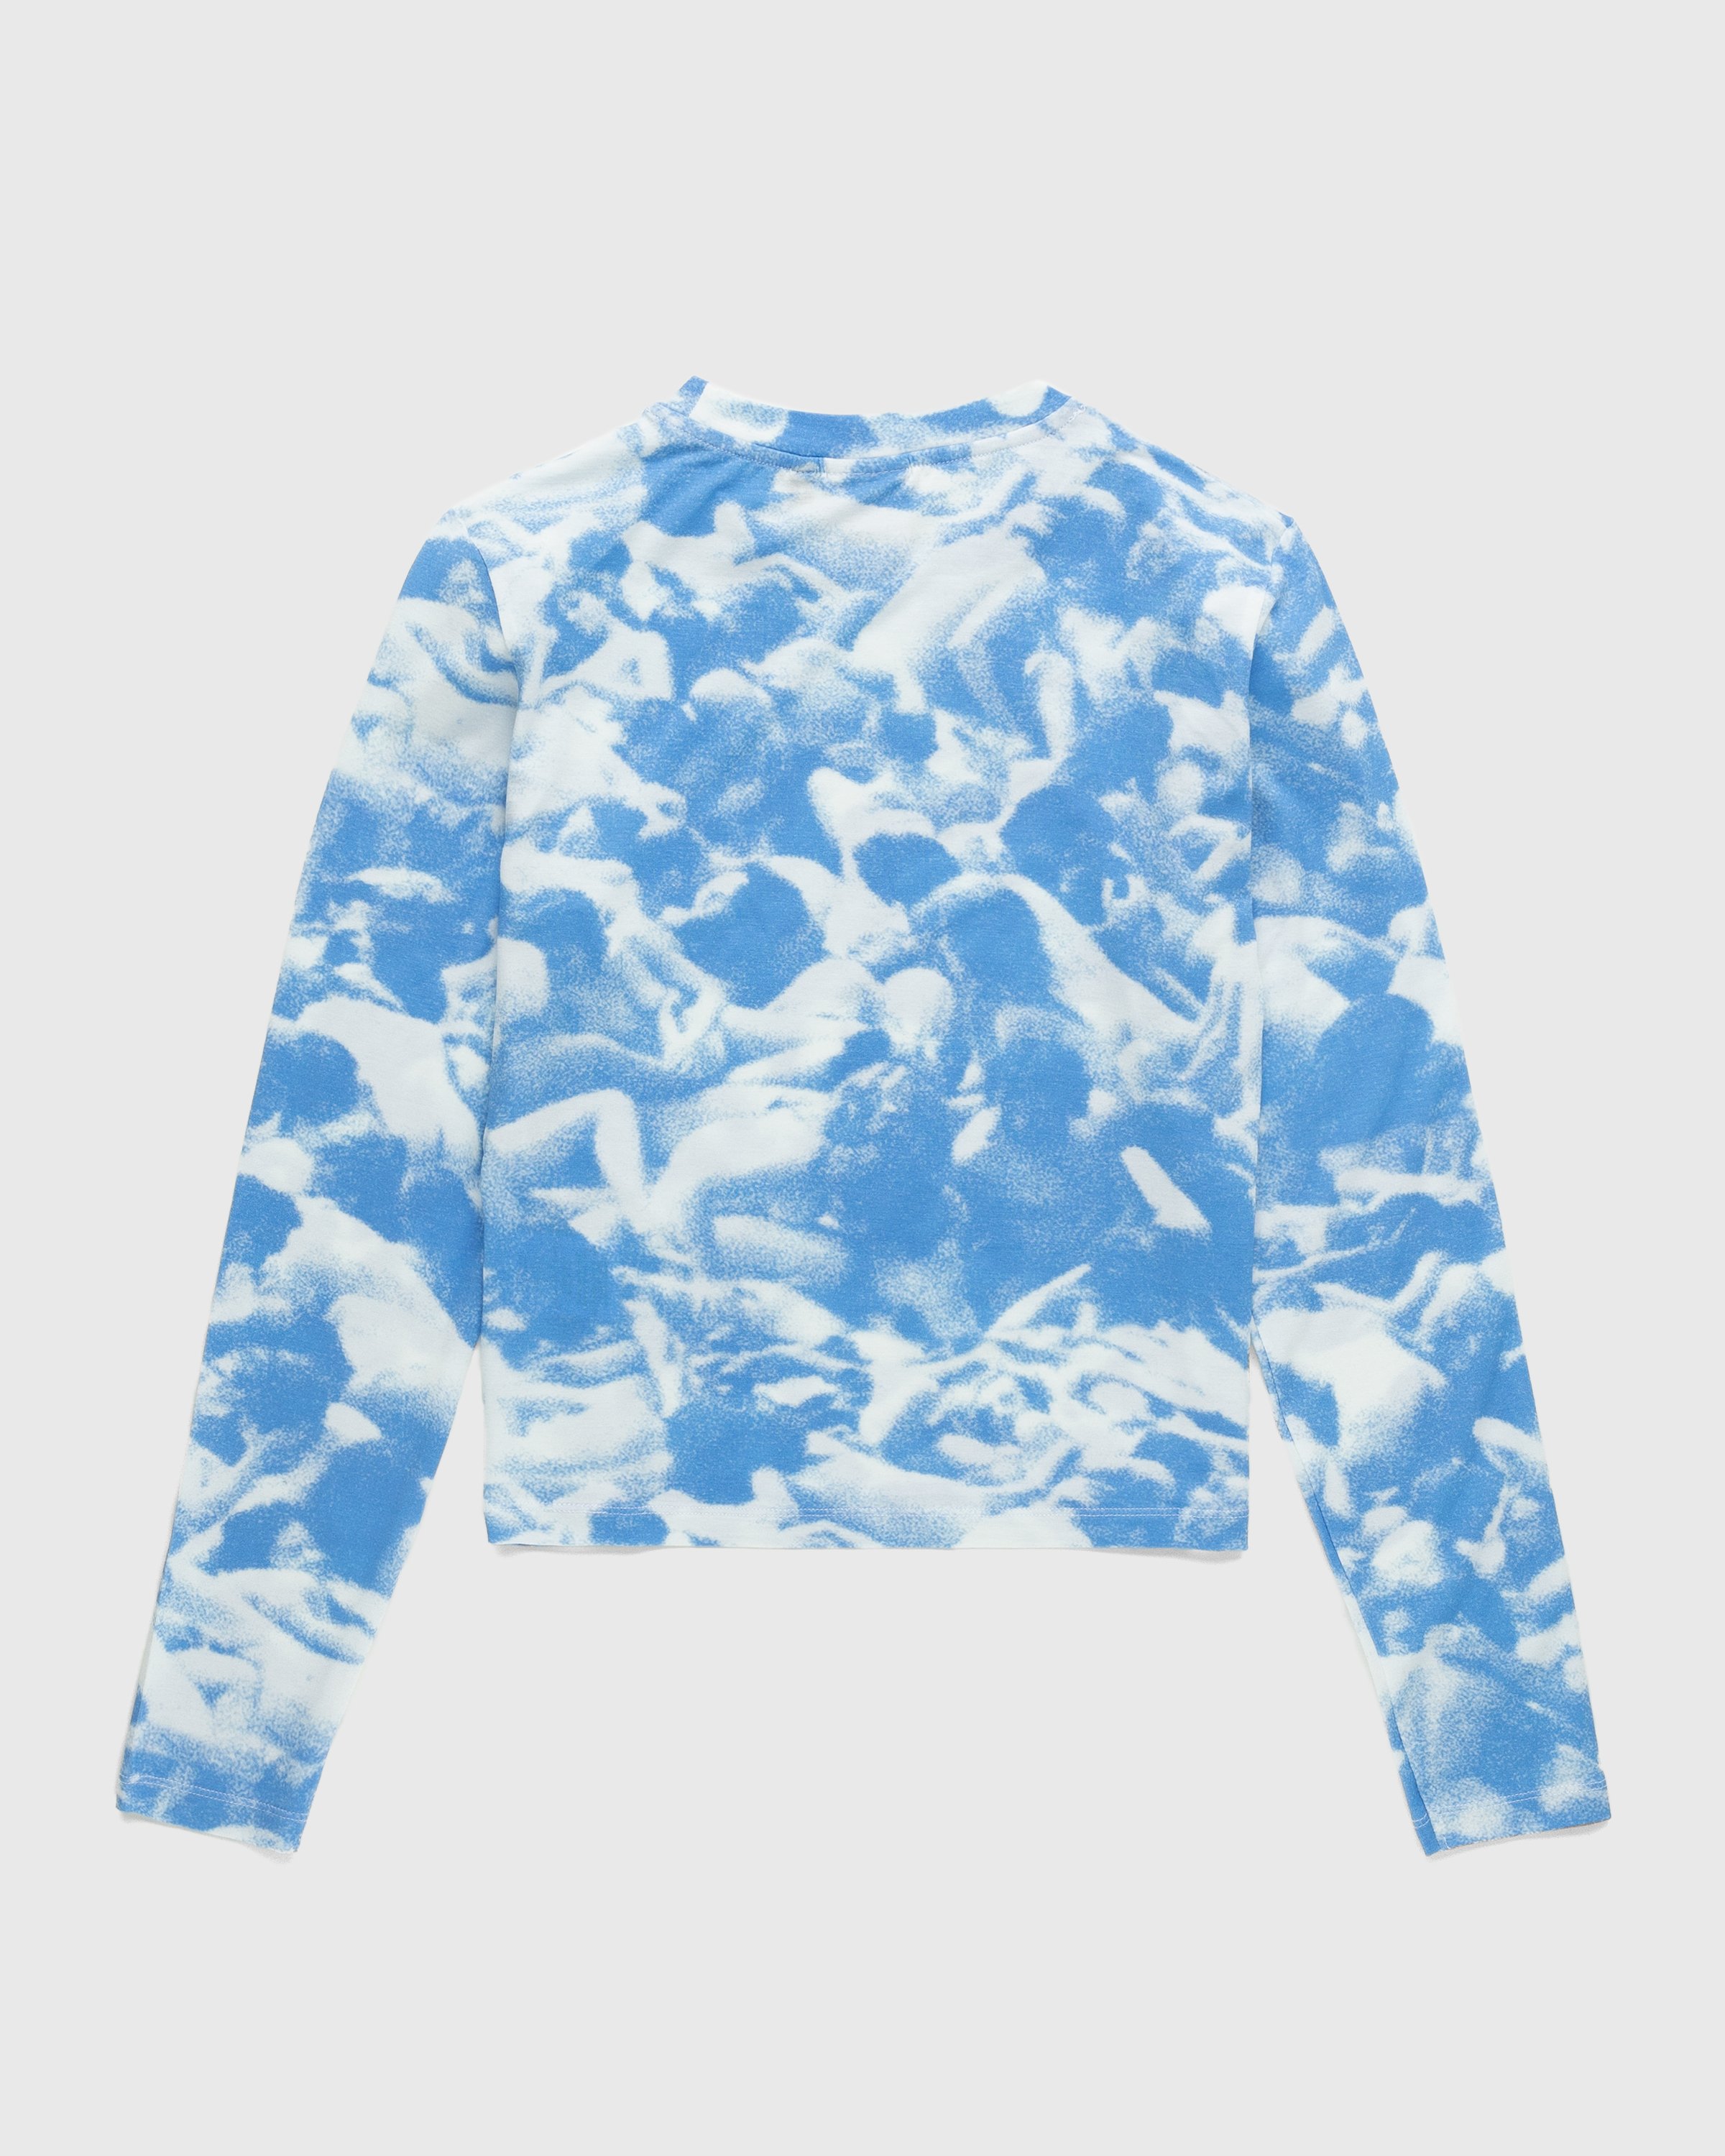 Carne Bollente - Hundredsome Longsleeve Multi - Clothing - Blue - Image 2